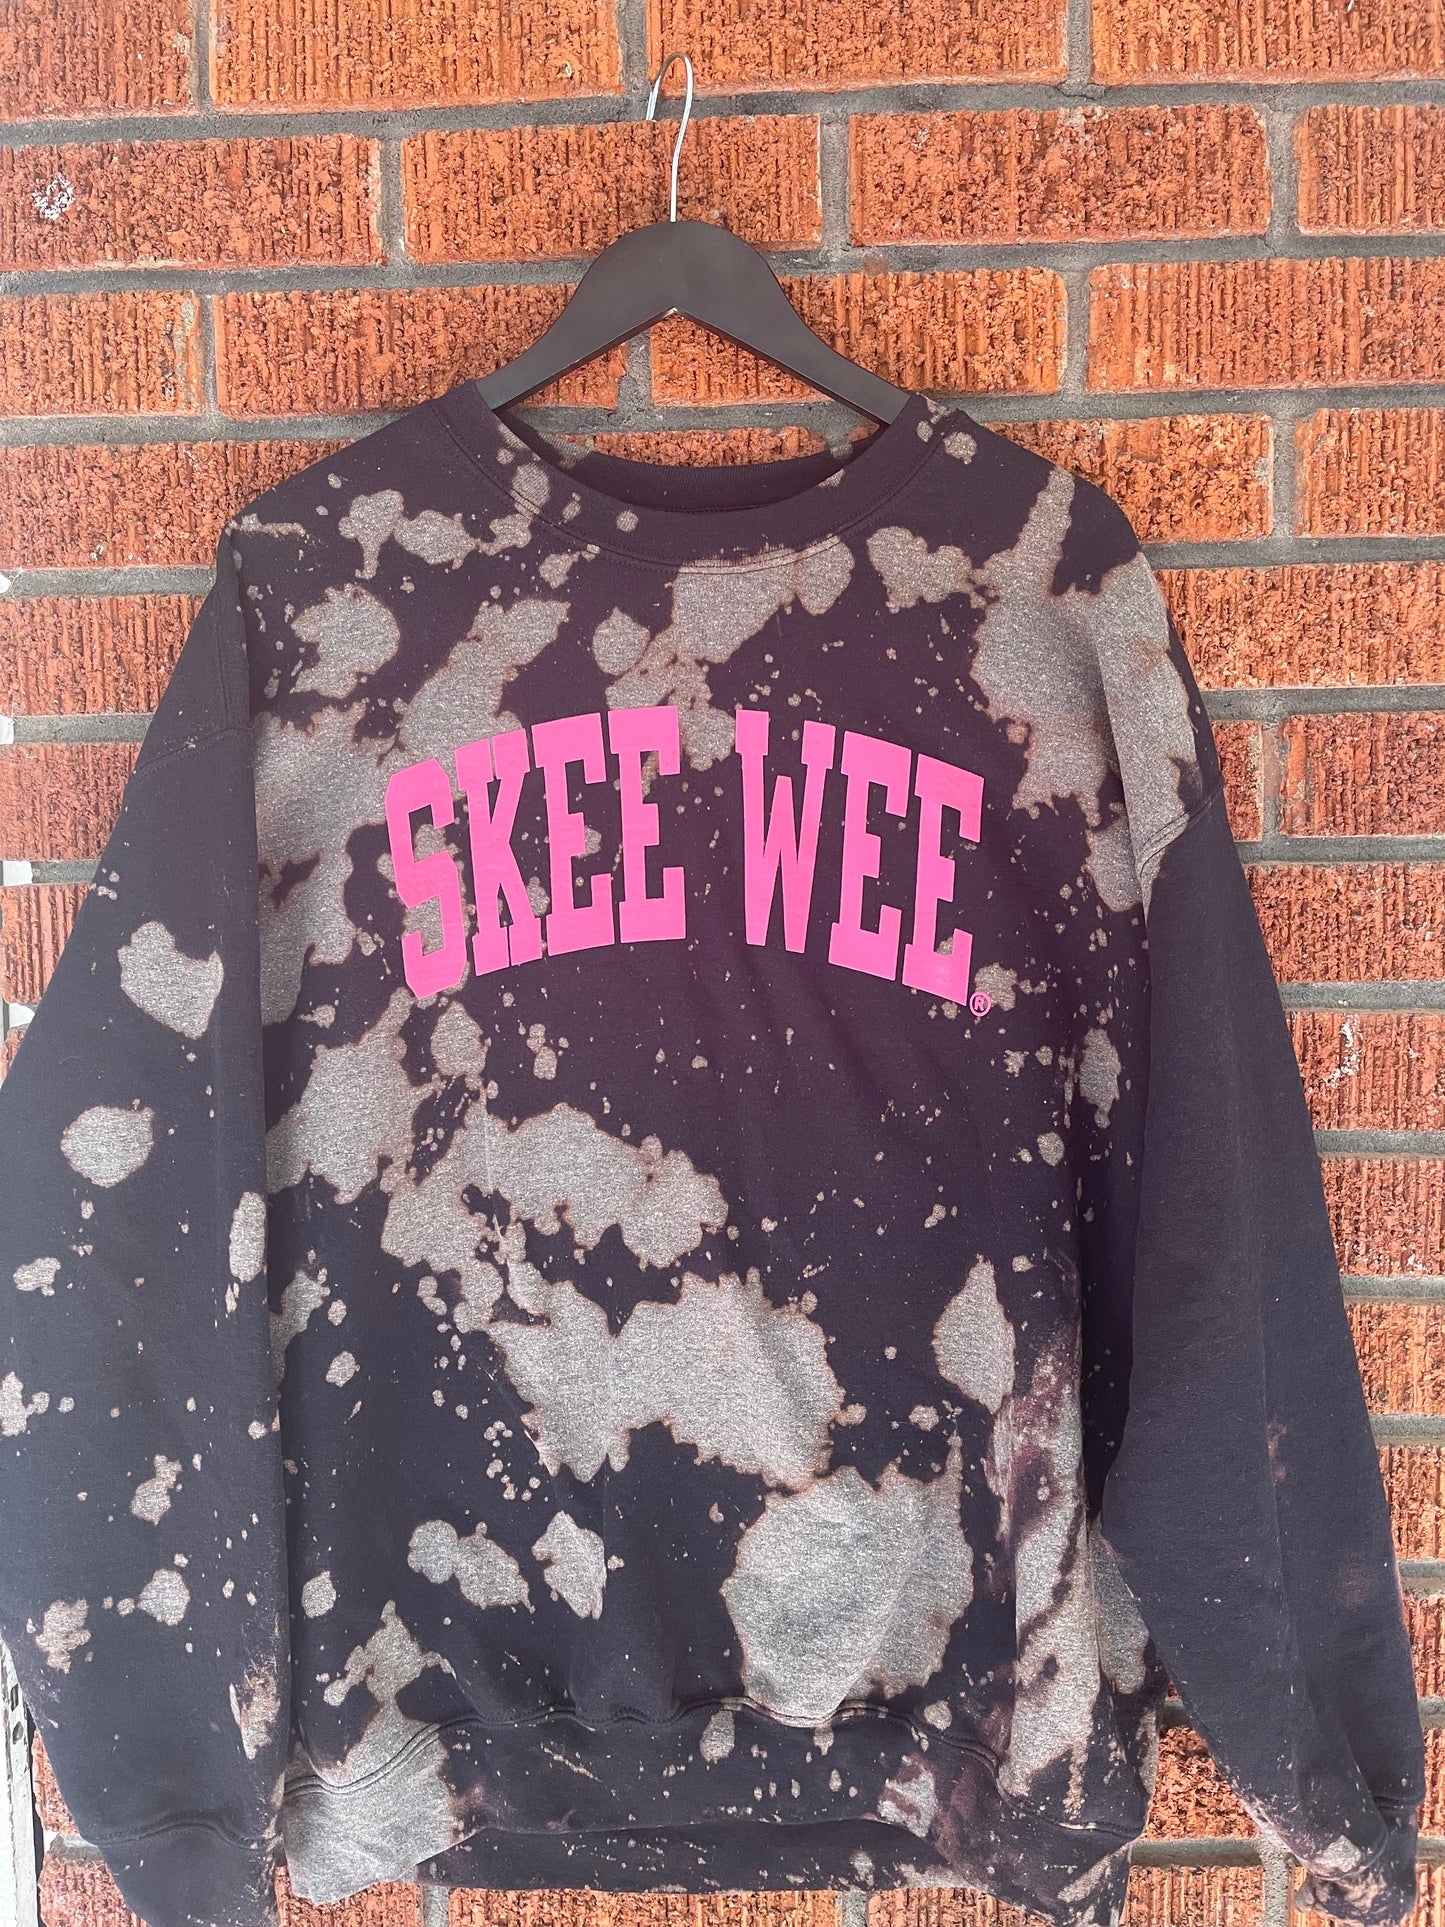 The Black Skee Wee Handmade Crew Neck Sweatshirt - [CCL Designs] - AKA Alpha Kappa Alpha Pink and Green handmade hand bleach tie dye